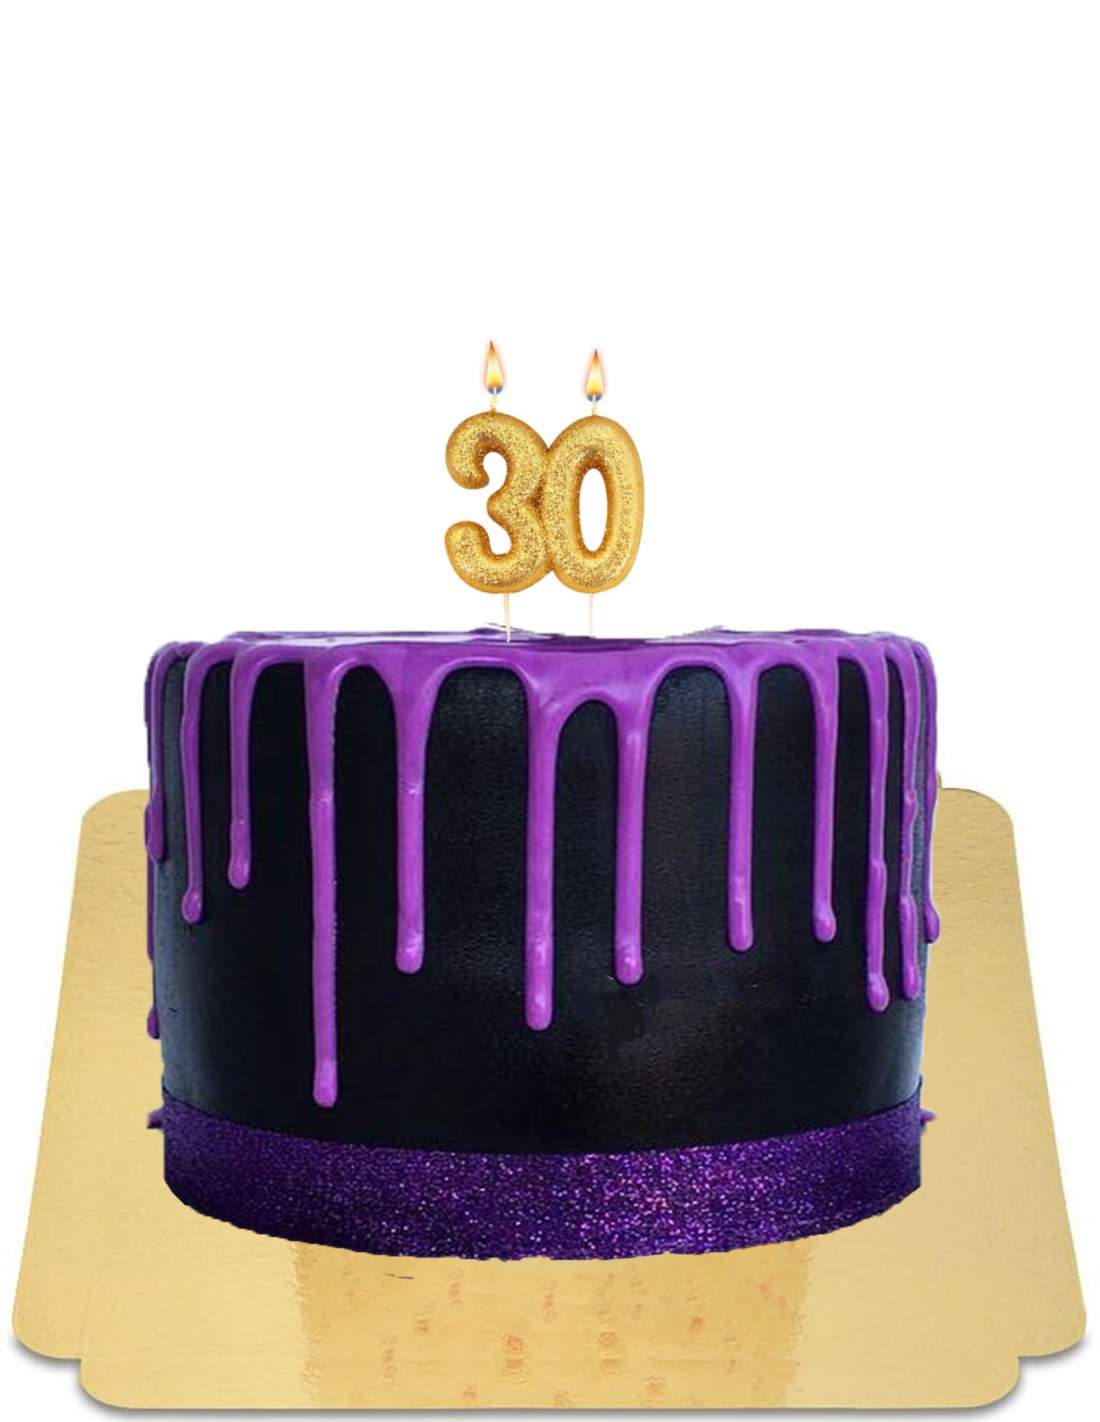 Drip cake violet et noir vegan, sans gluten